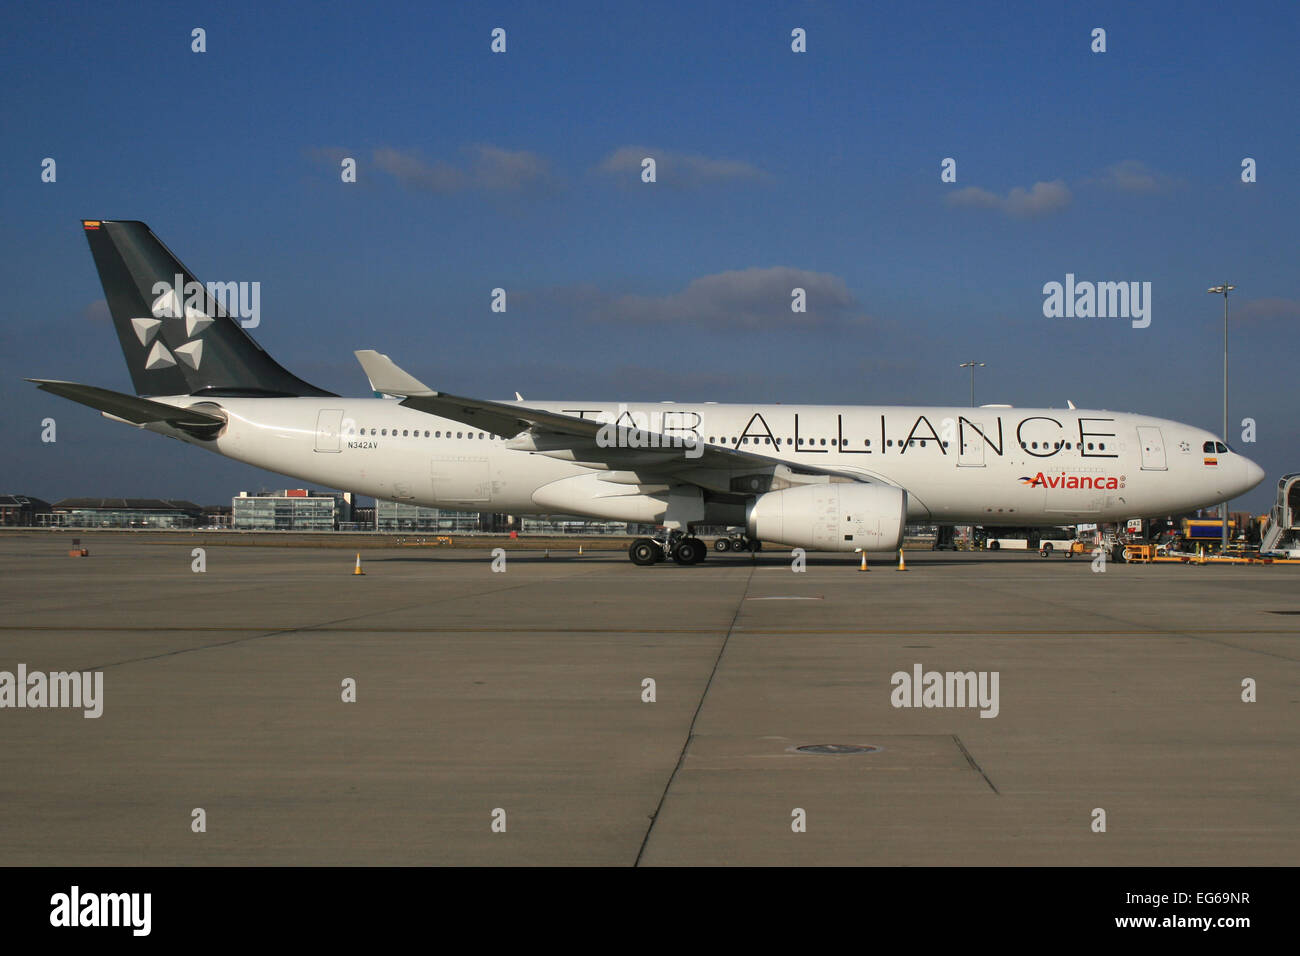 STAR ALLIANCE TAM BRASIL A330 Stock Photo: 78815347 - Alamy